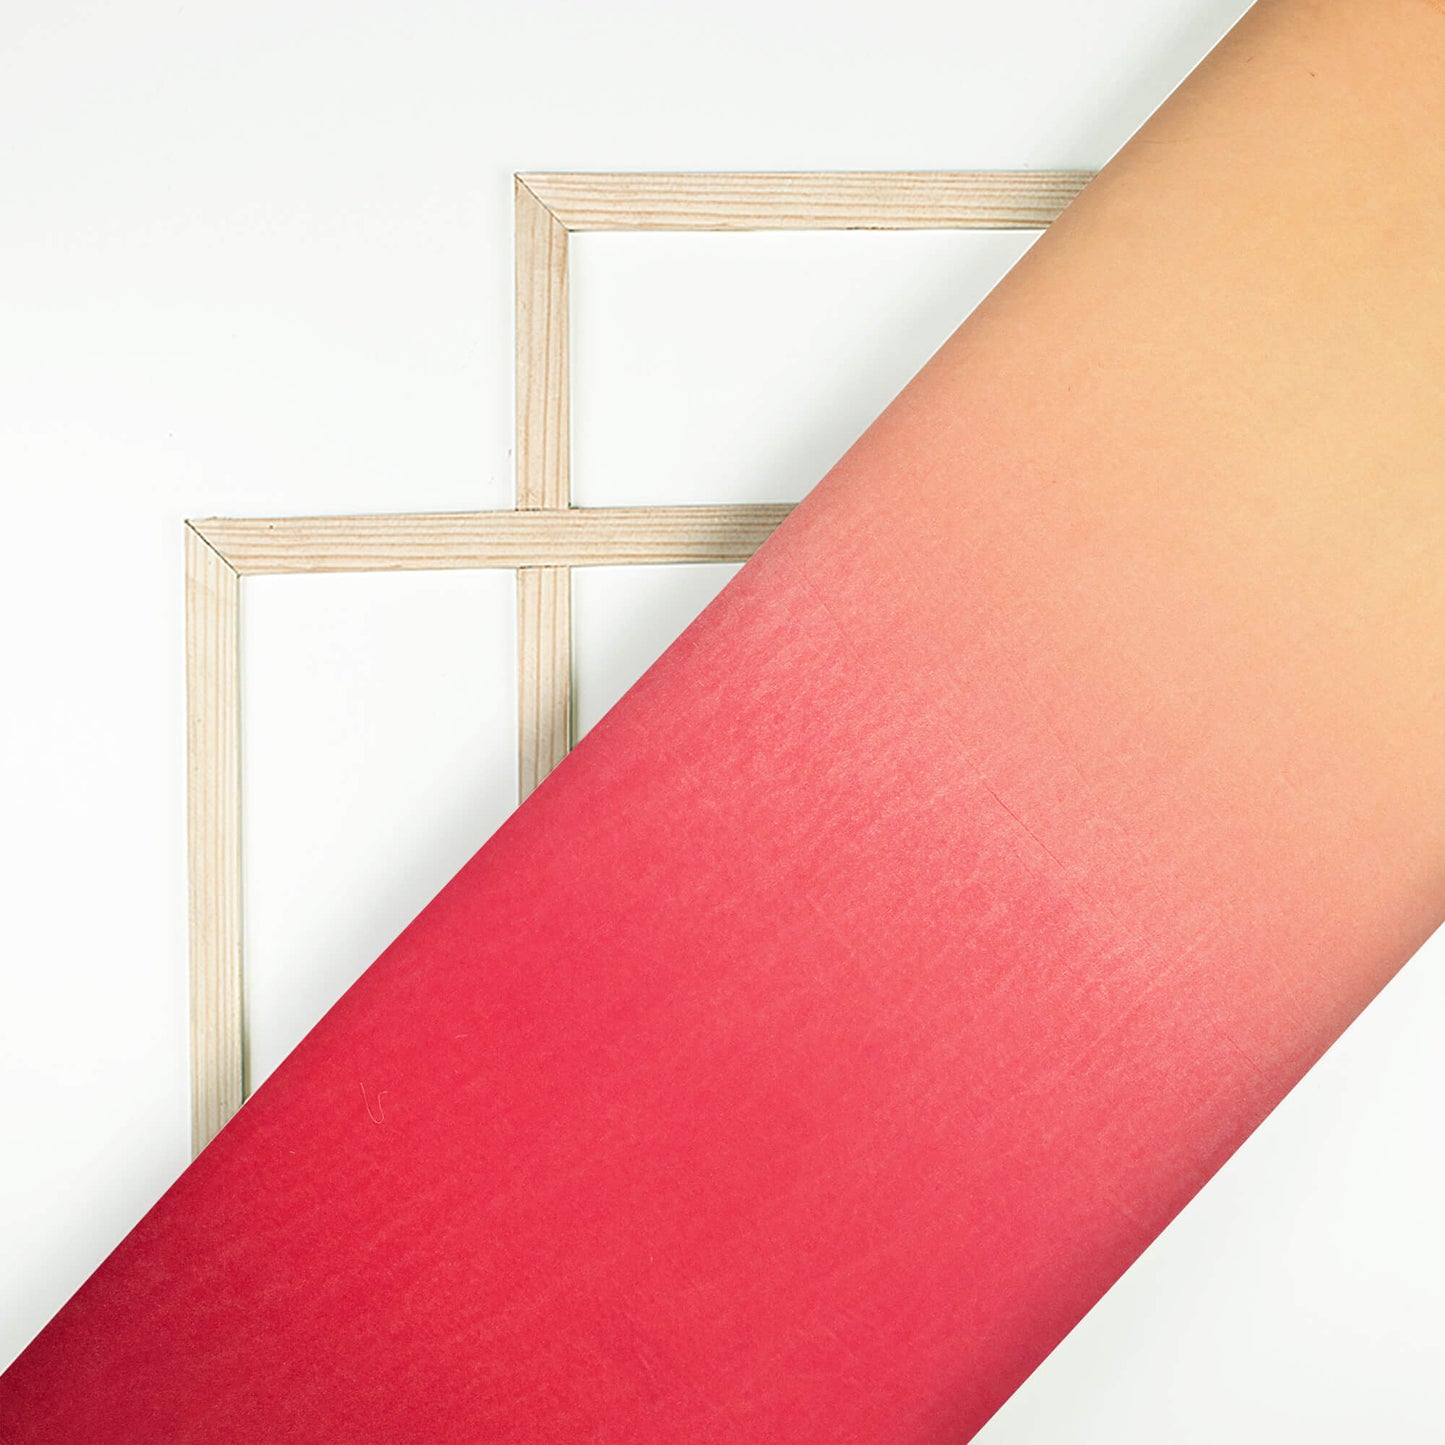 Deep Pink And Peach Ombre Pattern Digital Print Premium Velvet Fabric